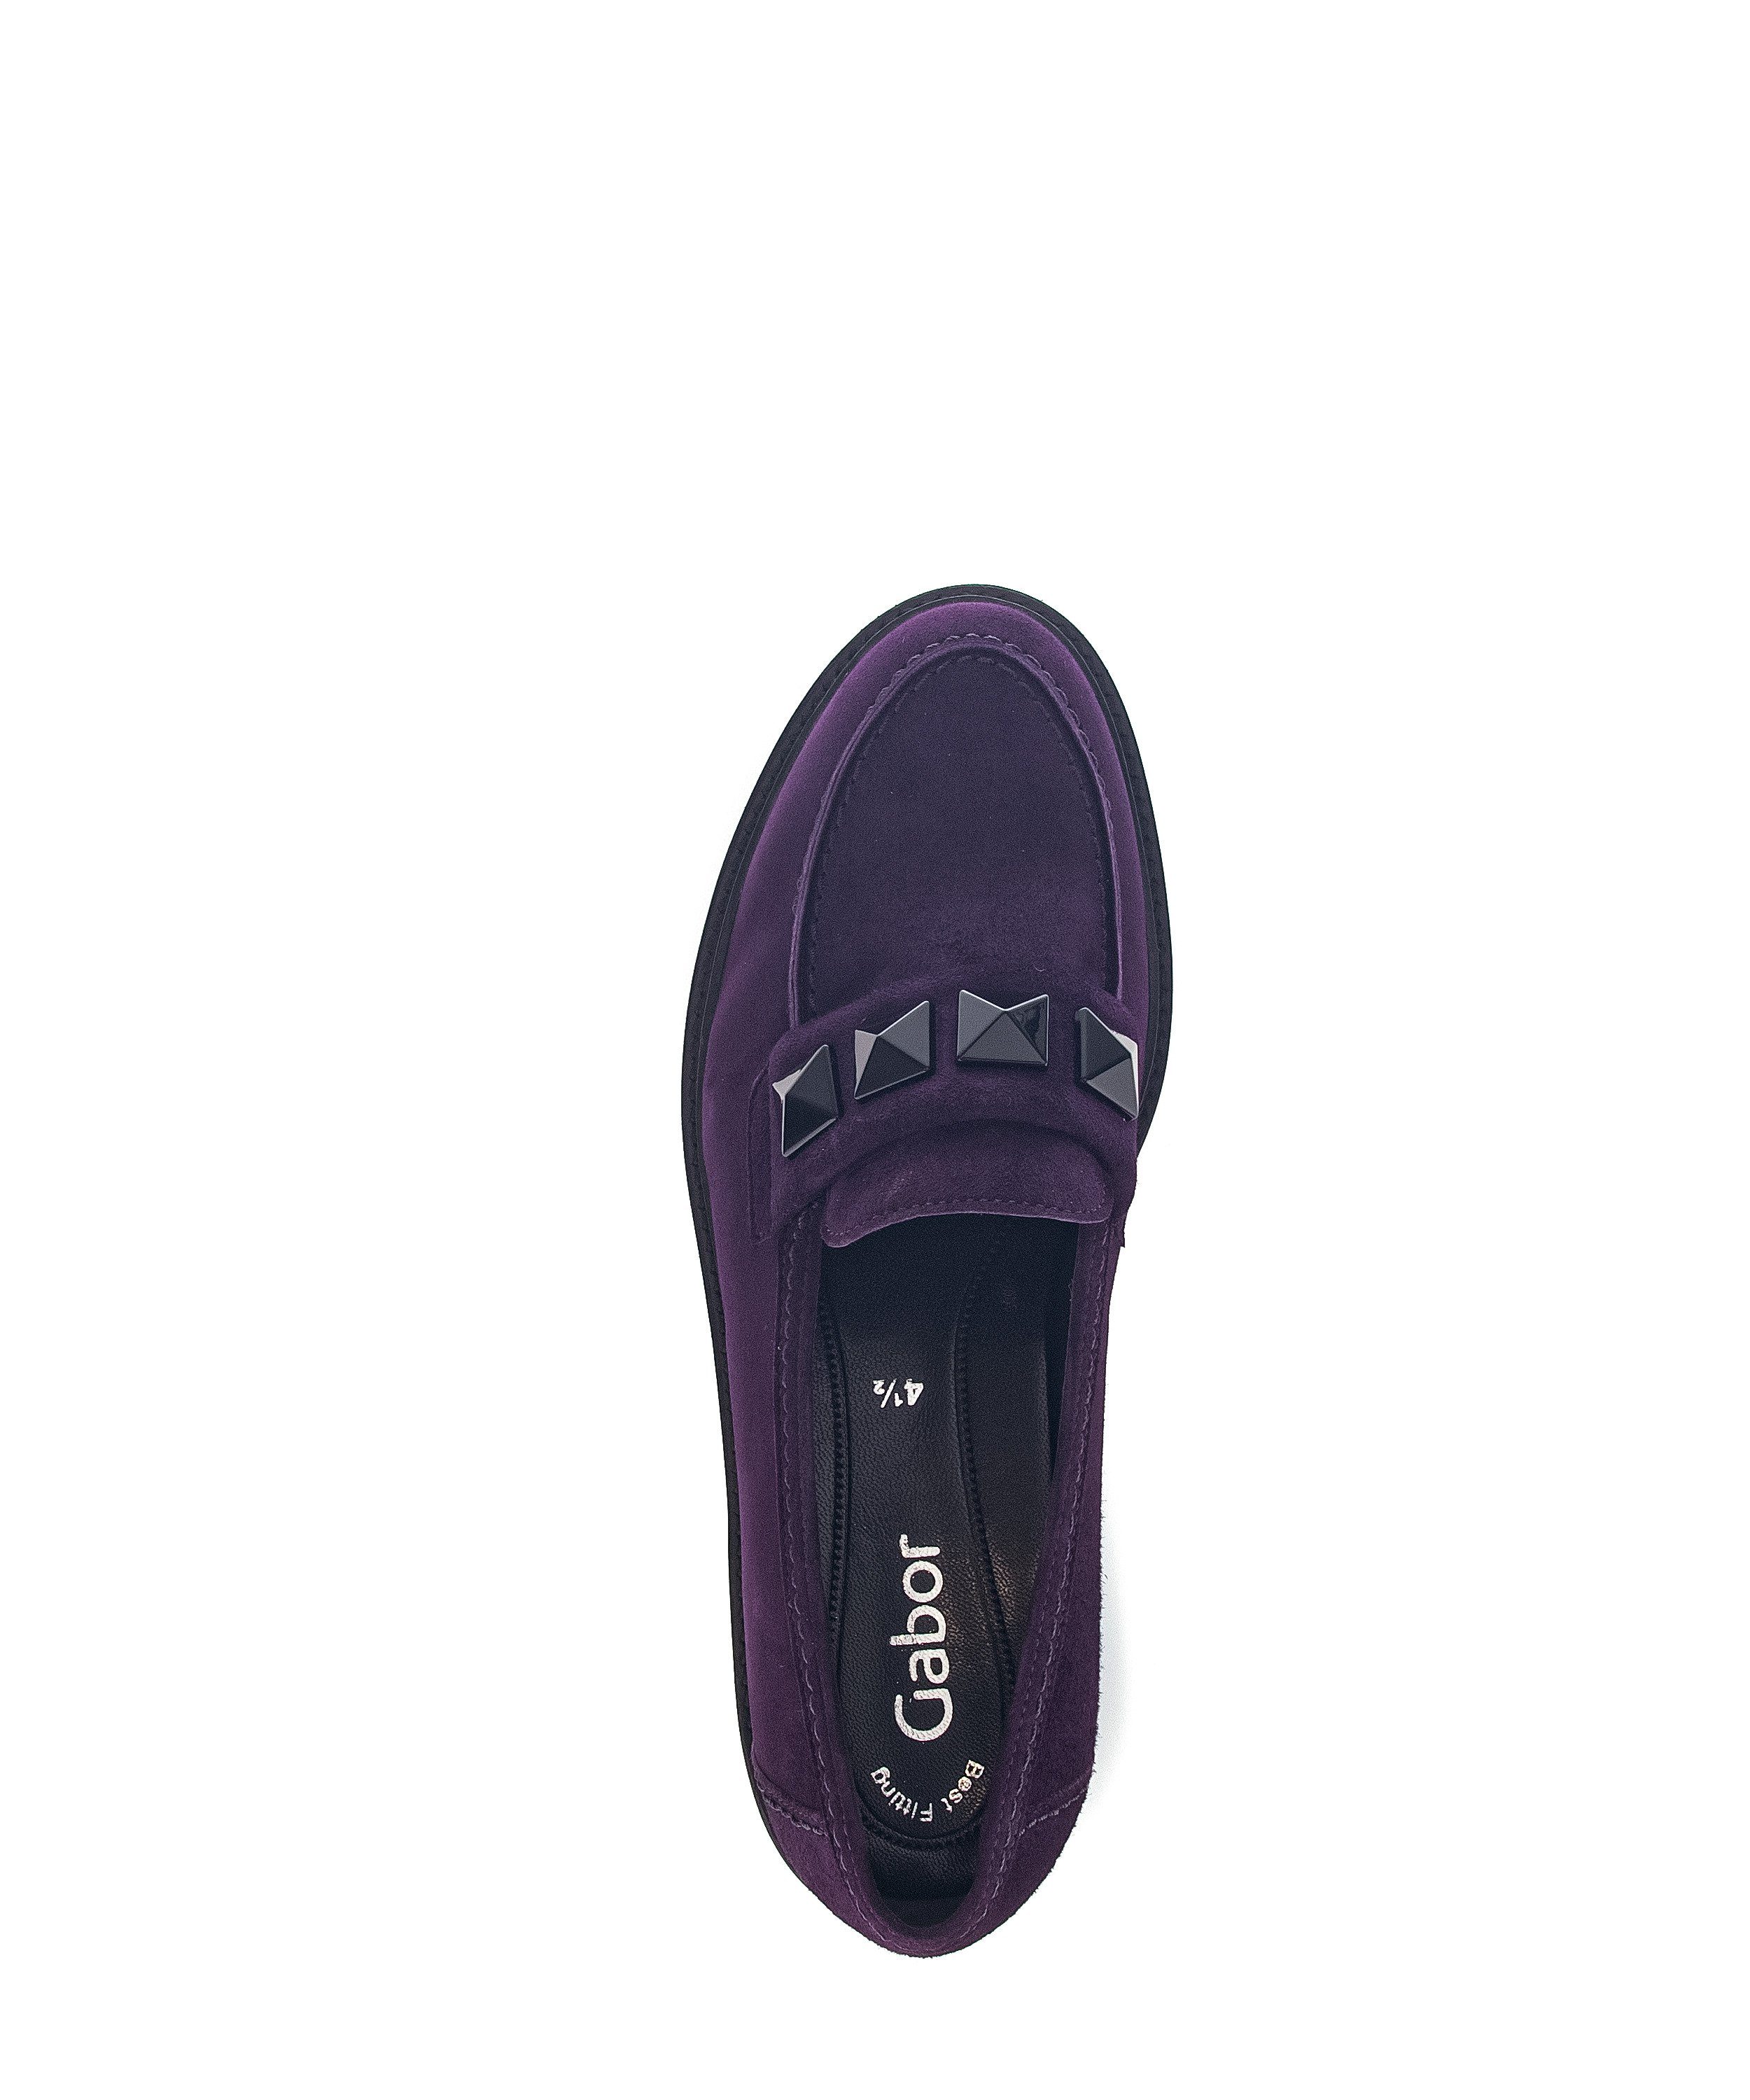 Slipper Gabor Lila (purple)